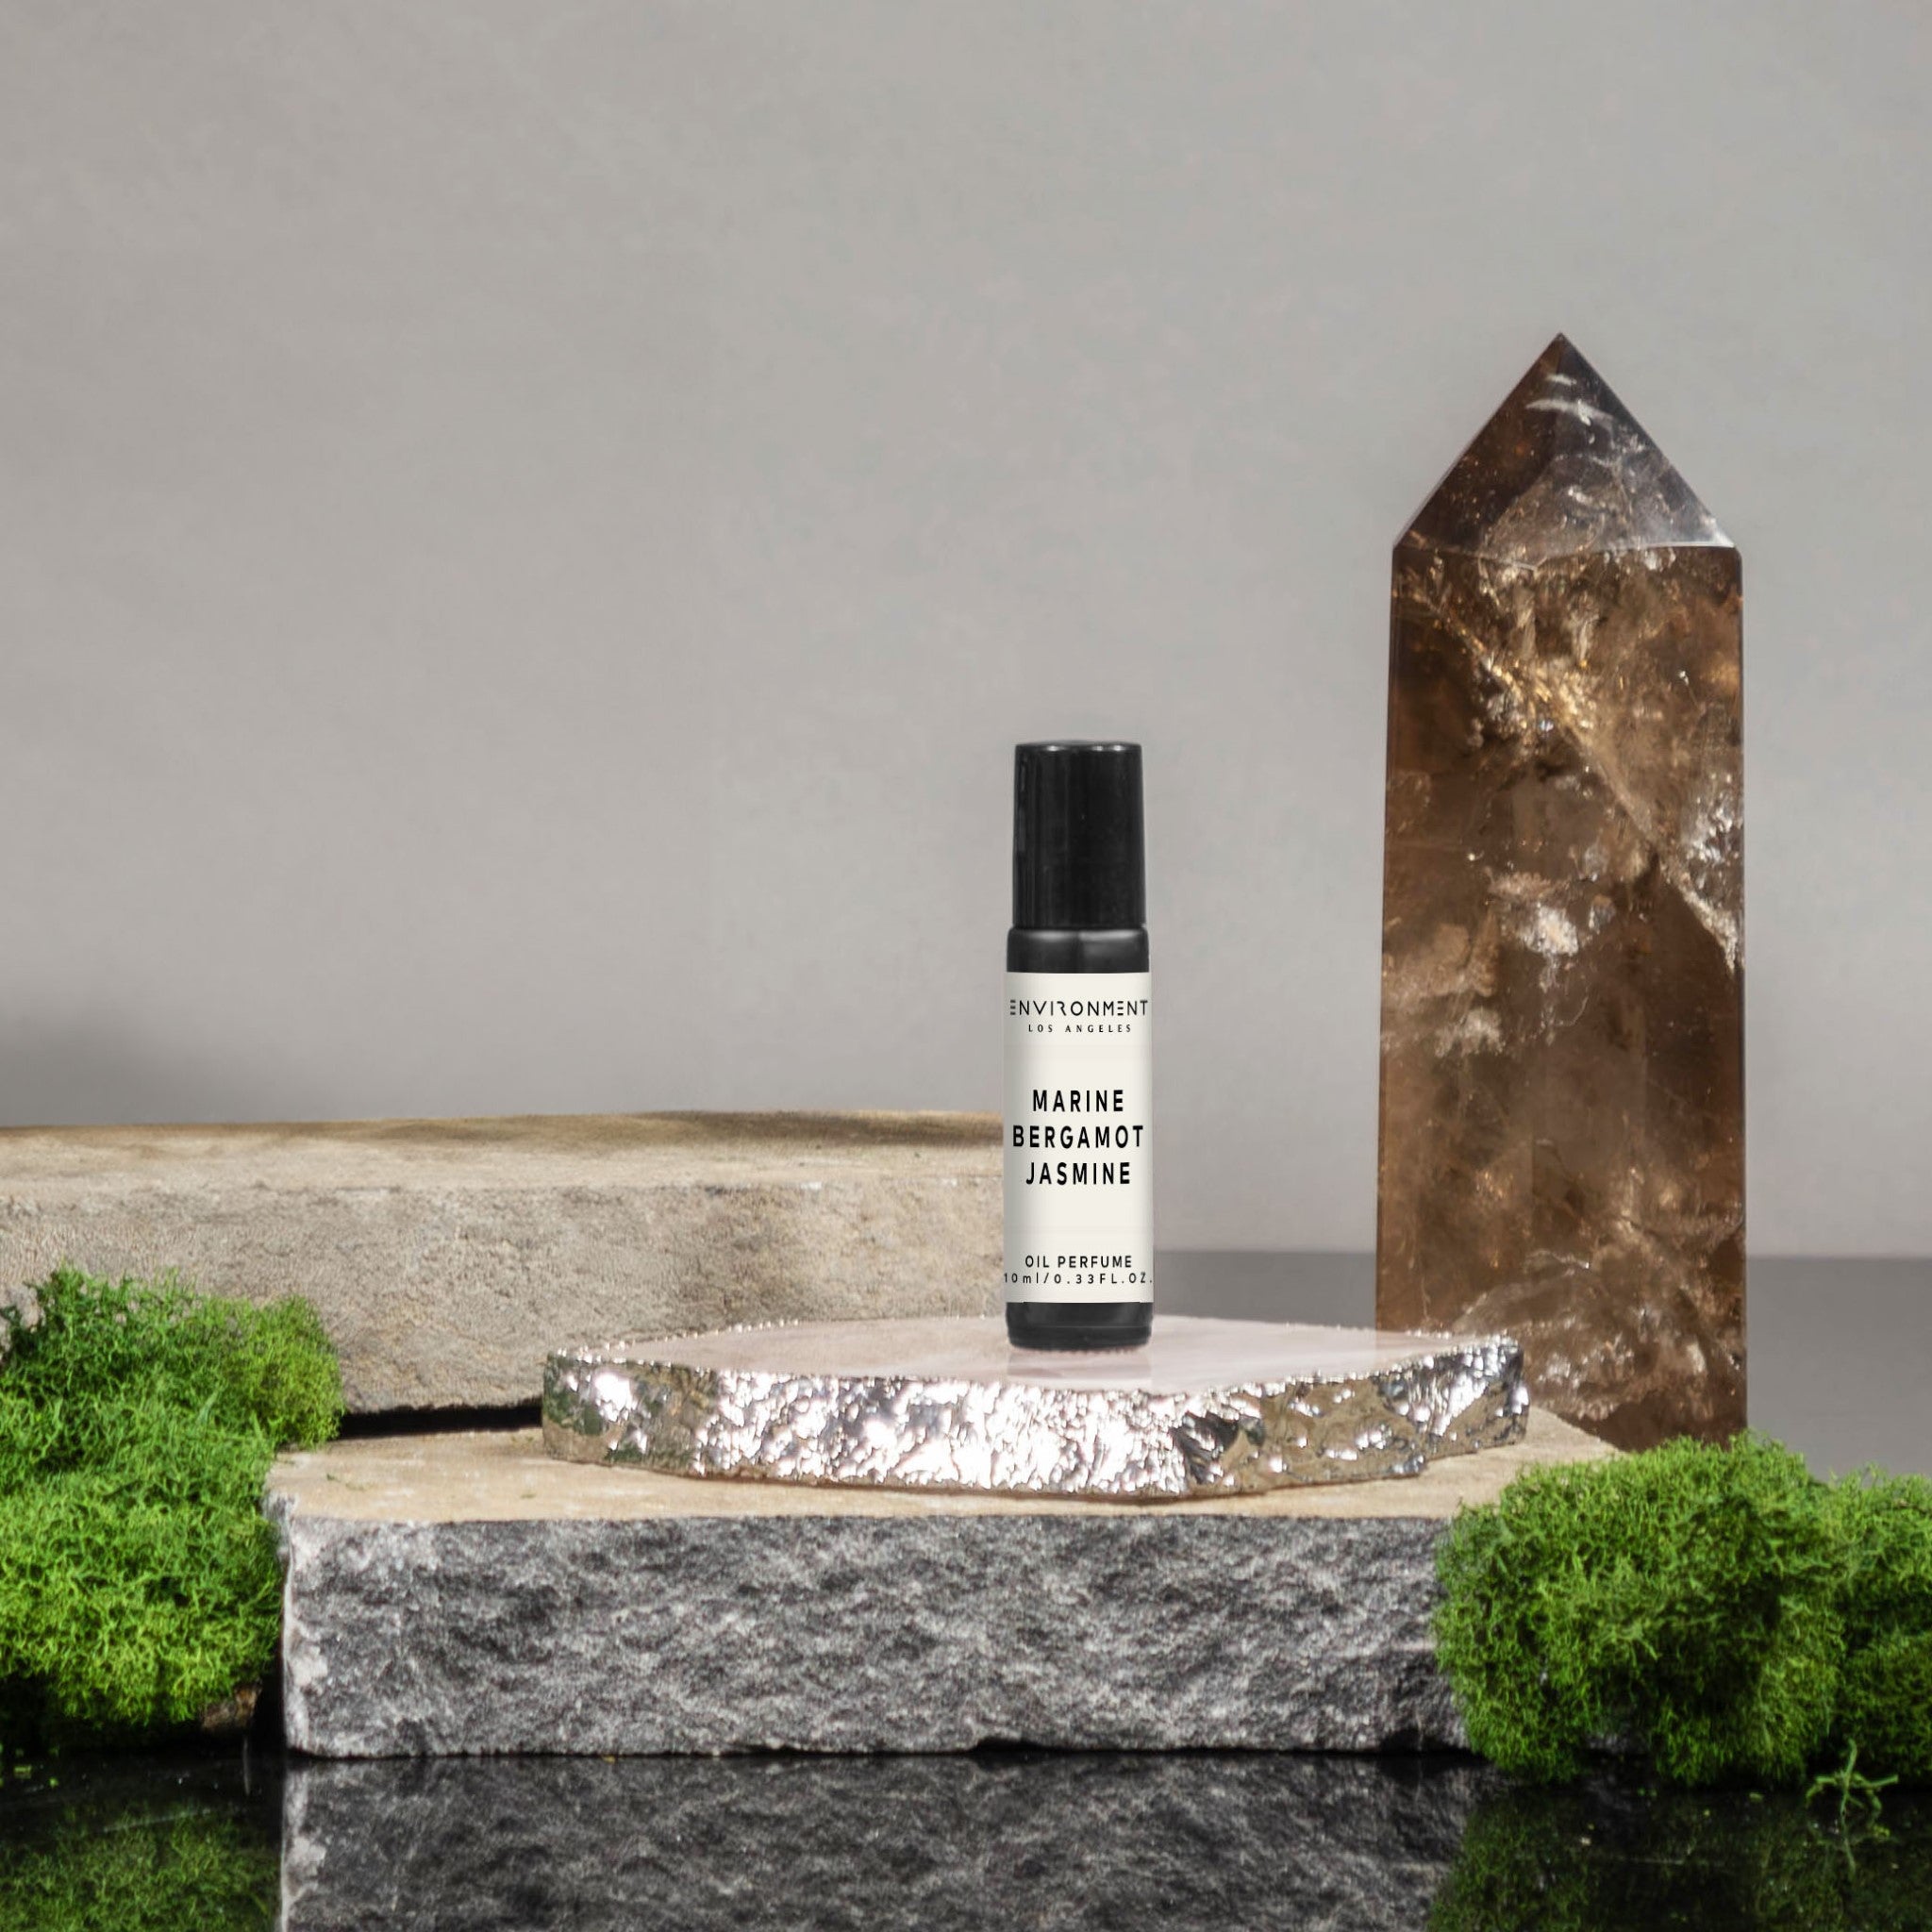 Marine | Bergamot | Jasmine Roll-on Oil Perfume(Inspired by The Ritz Carlton Hotel®)